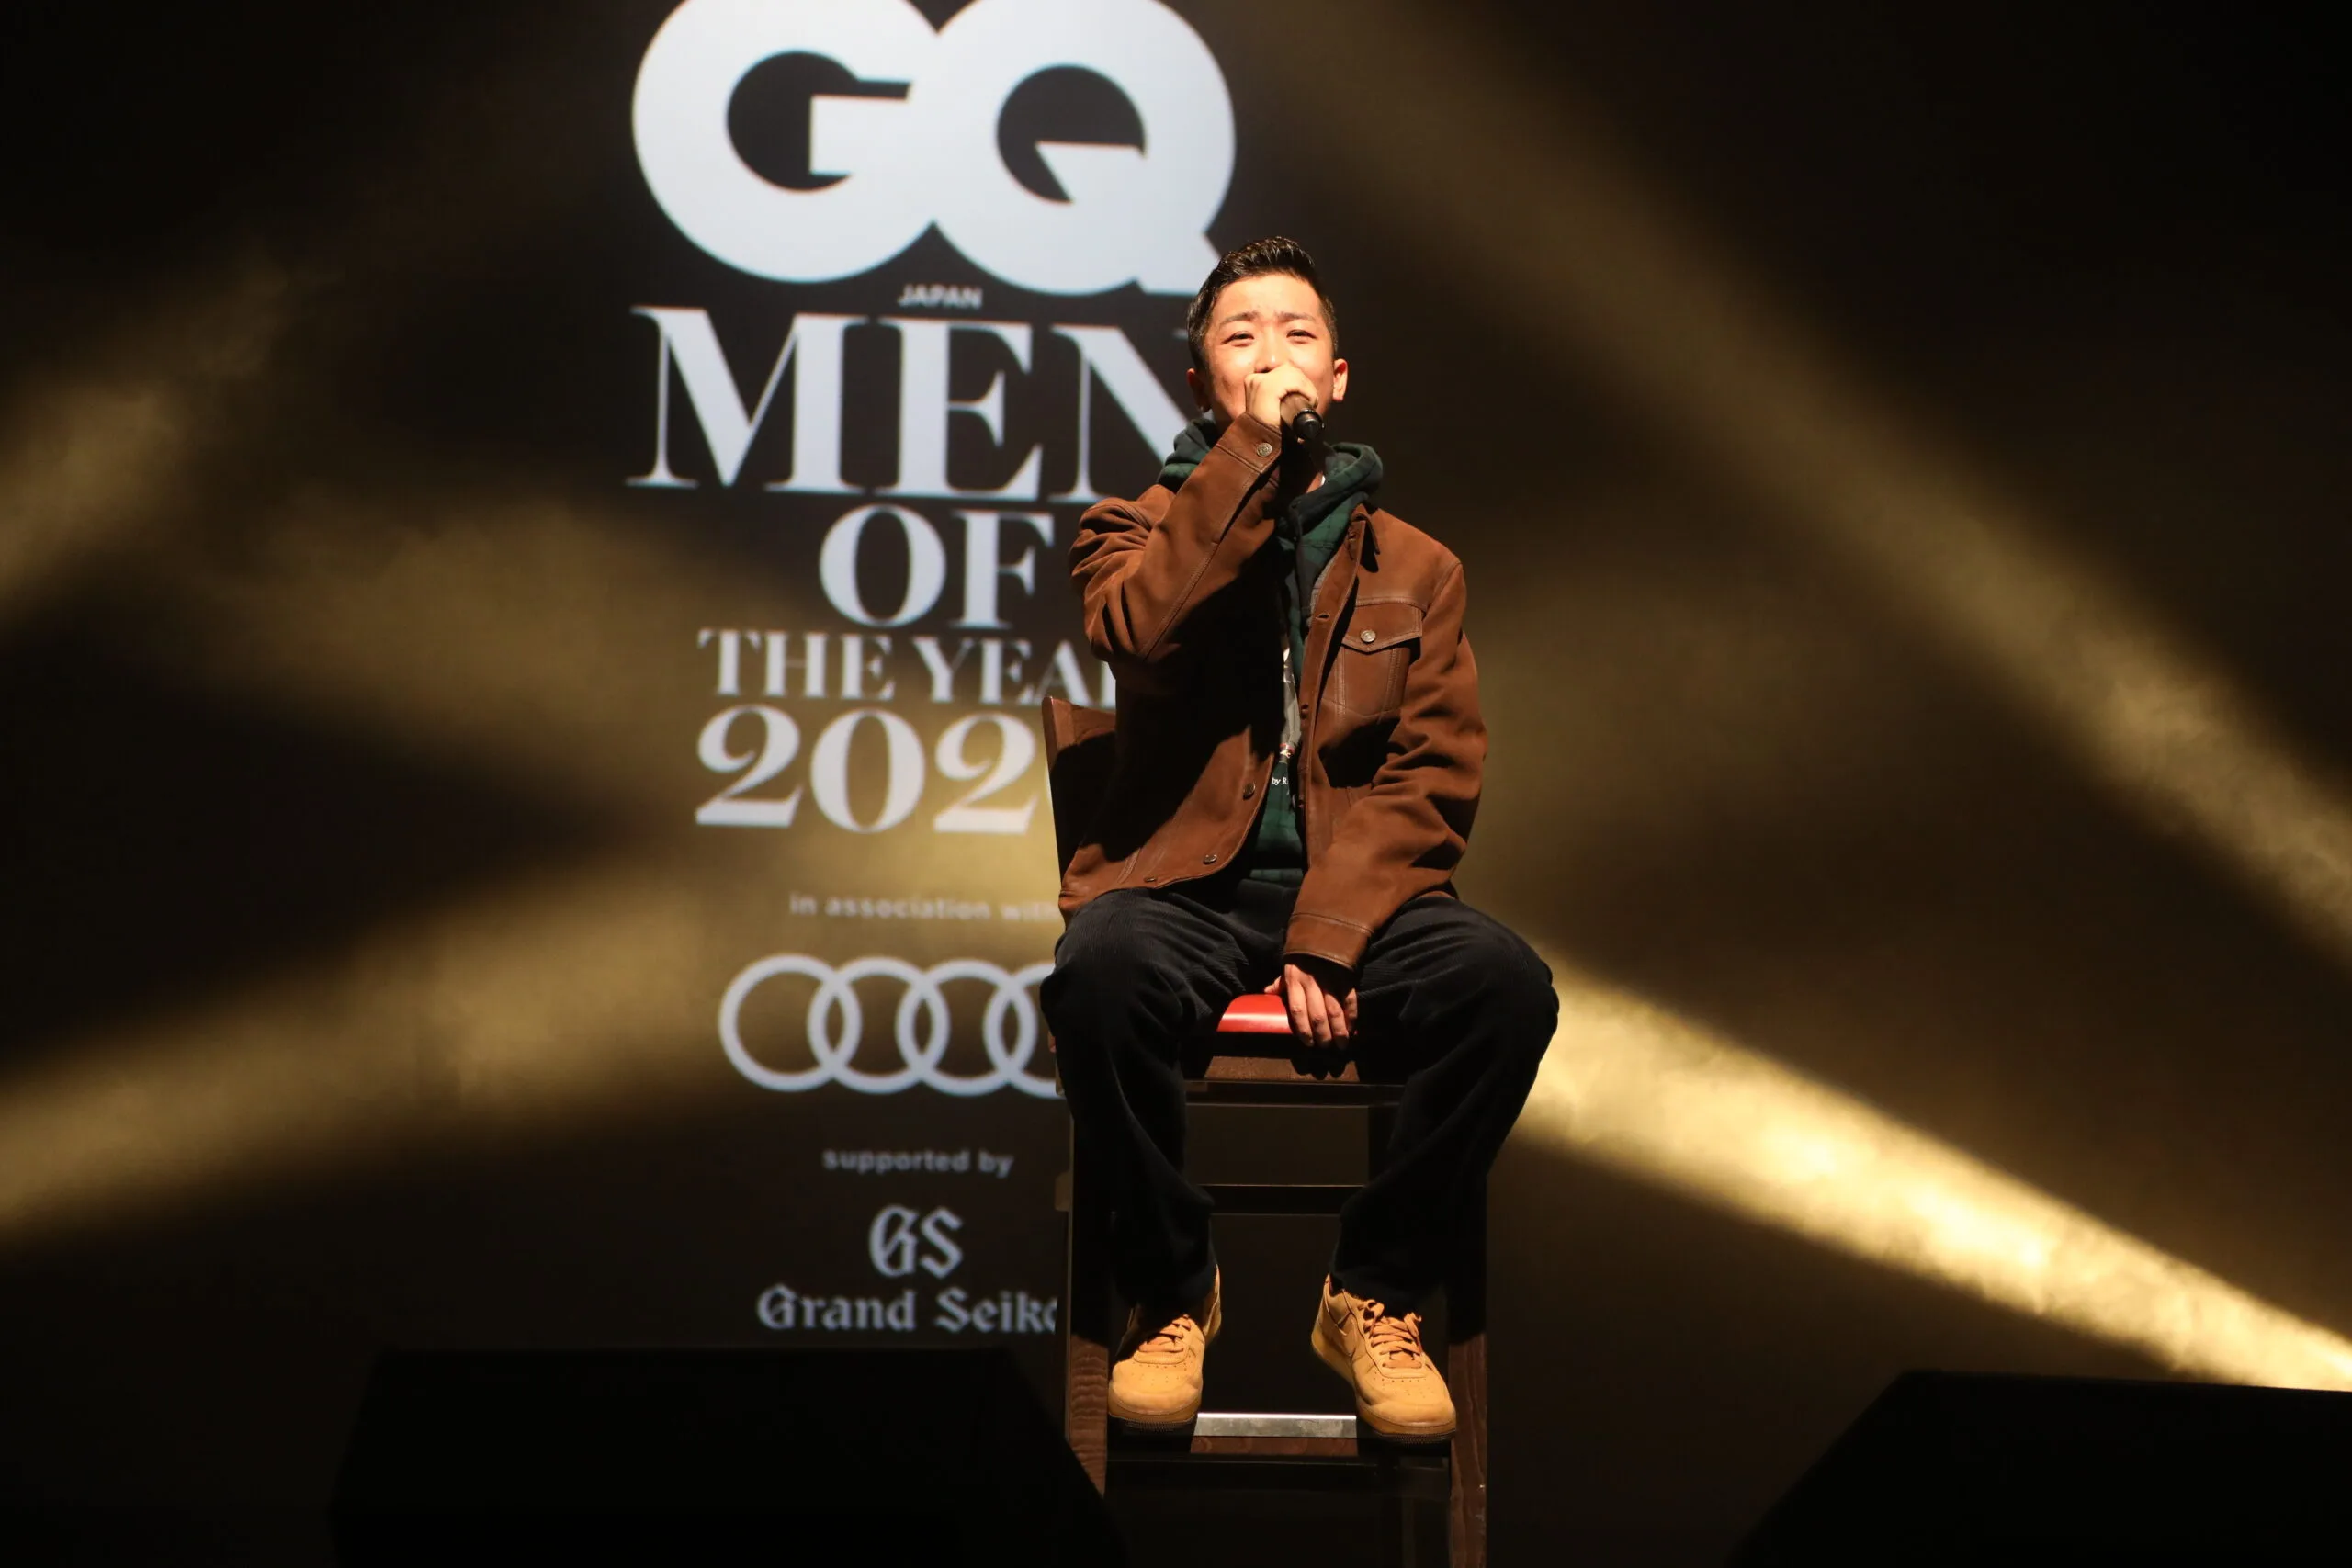 「GQ MEN OF THE YEAR 2020」の授賞式に参加した瑛人